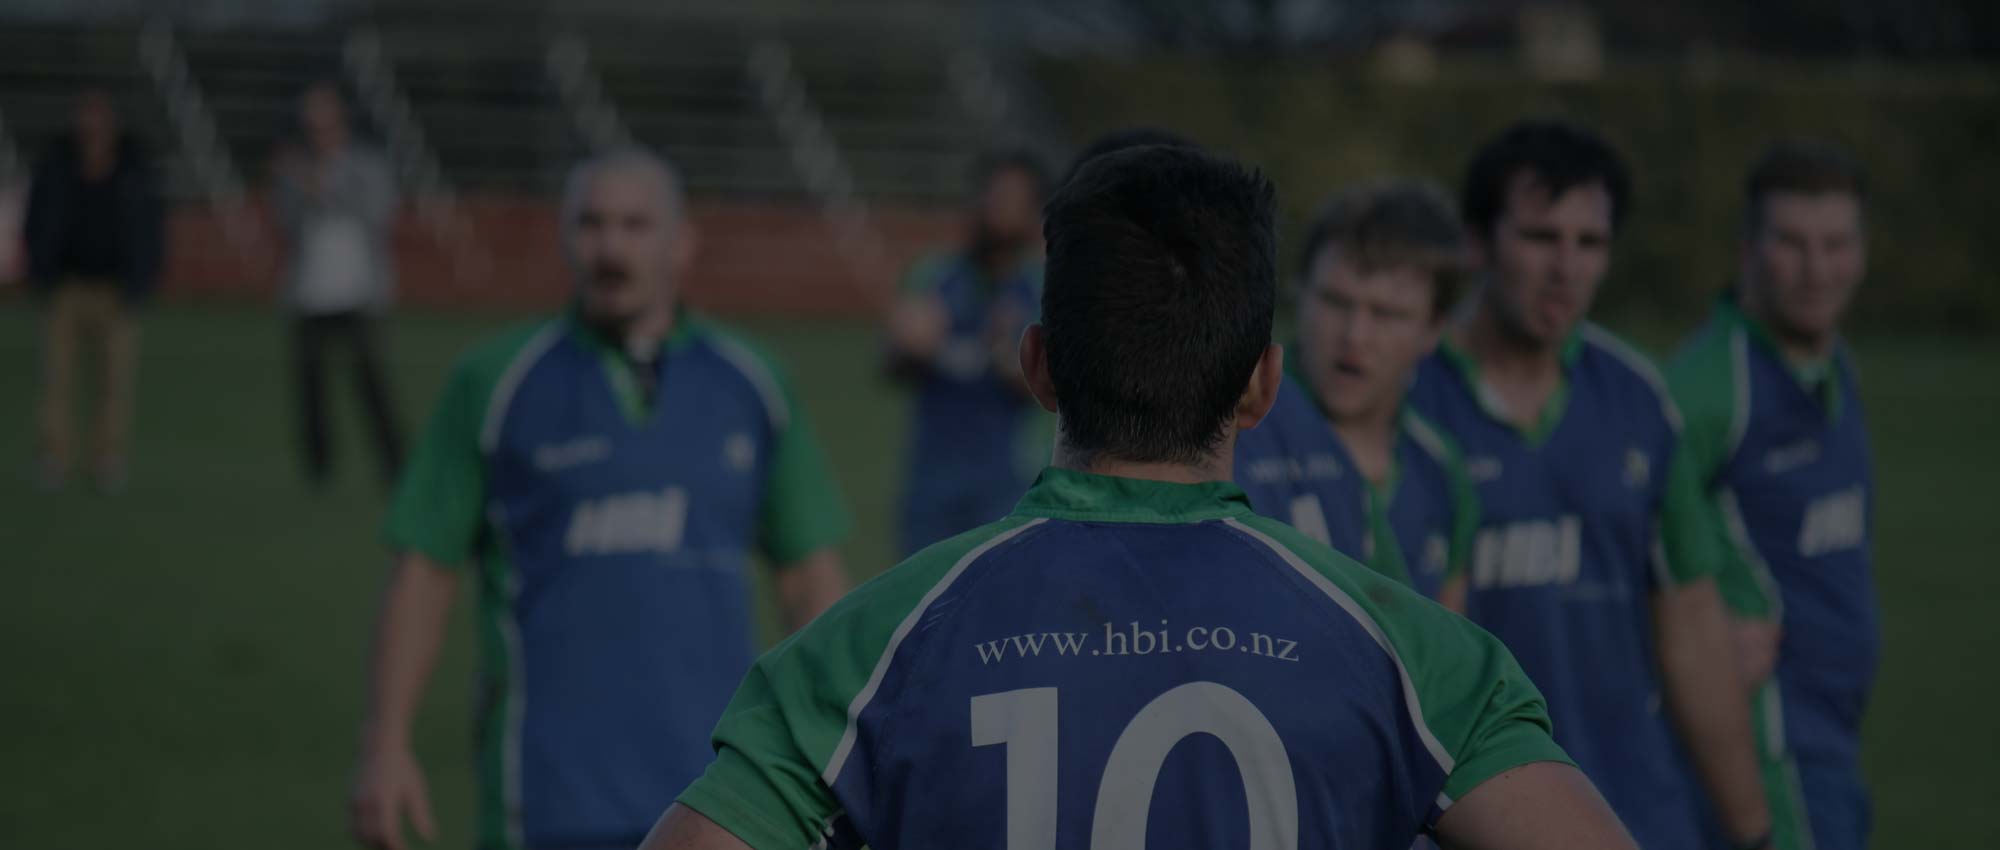 Jouer au Rugby New Zeland - Regis Lespinasse